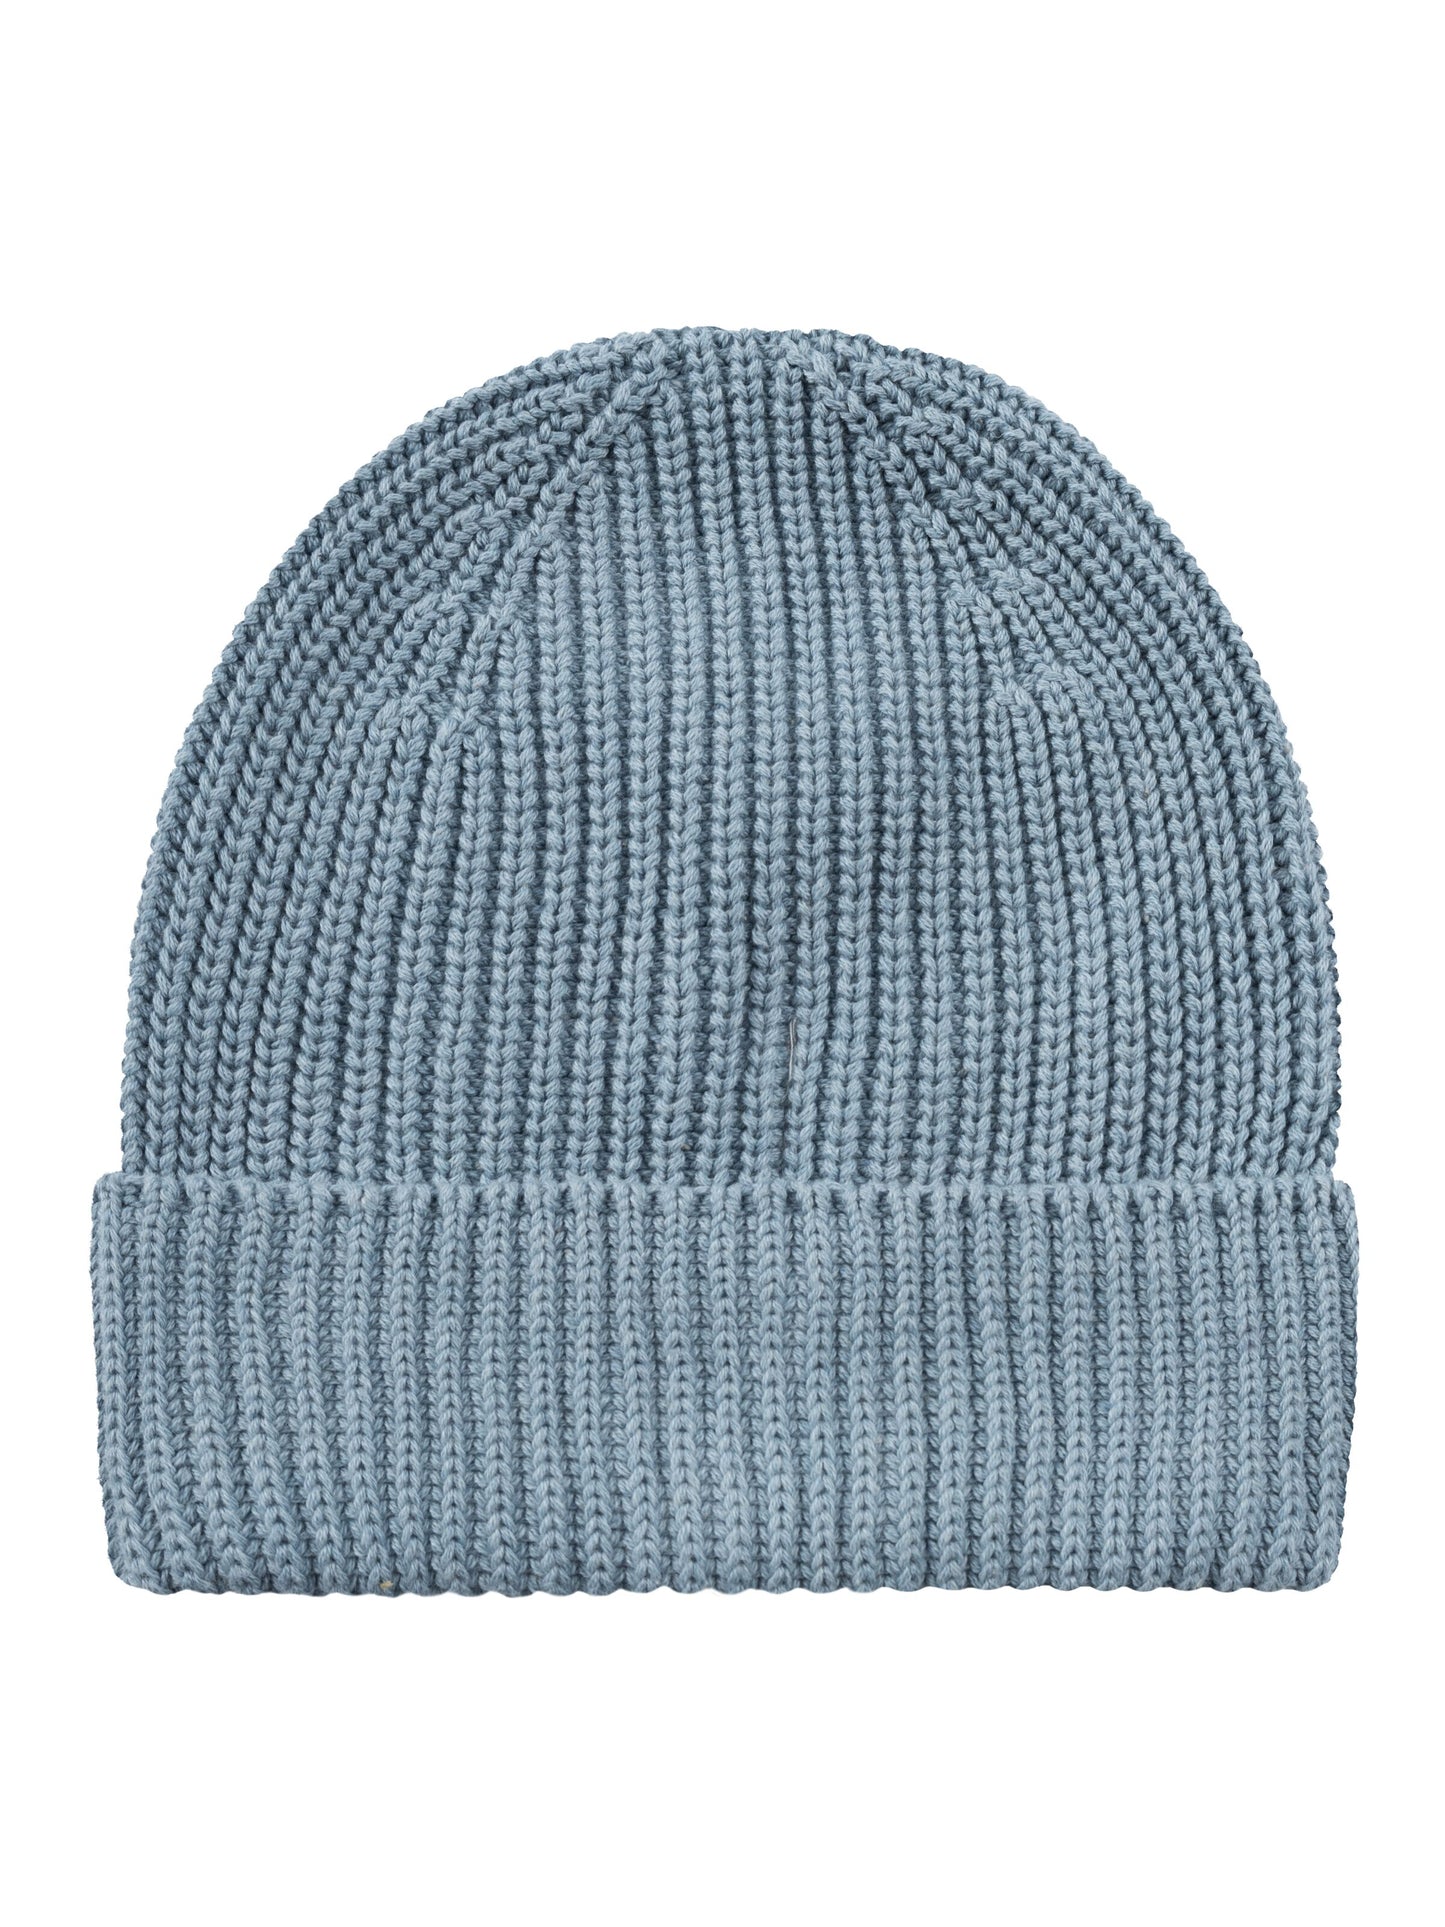 KCA - Rib hat Dusty Blue Melange One Size